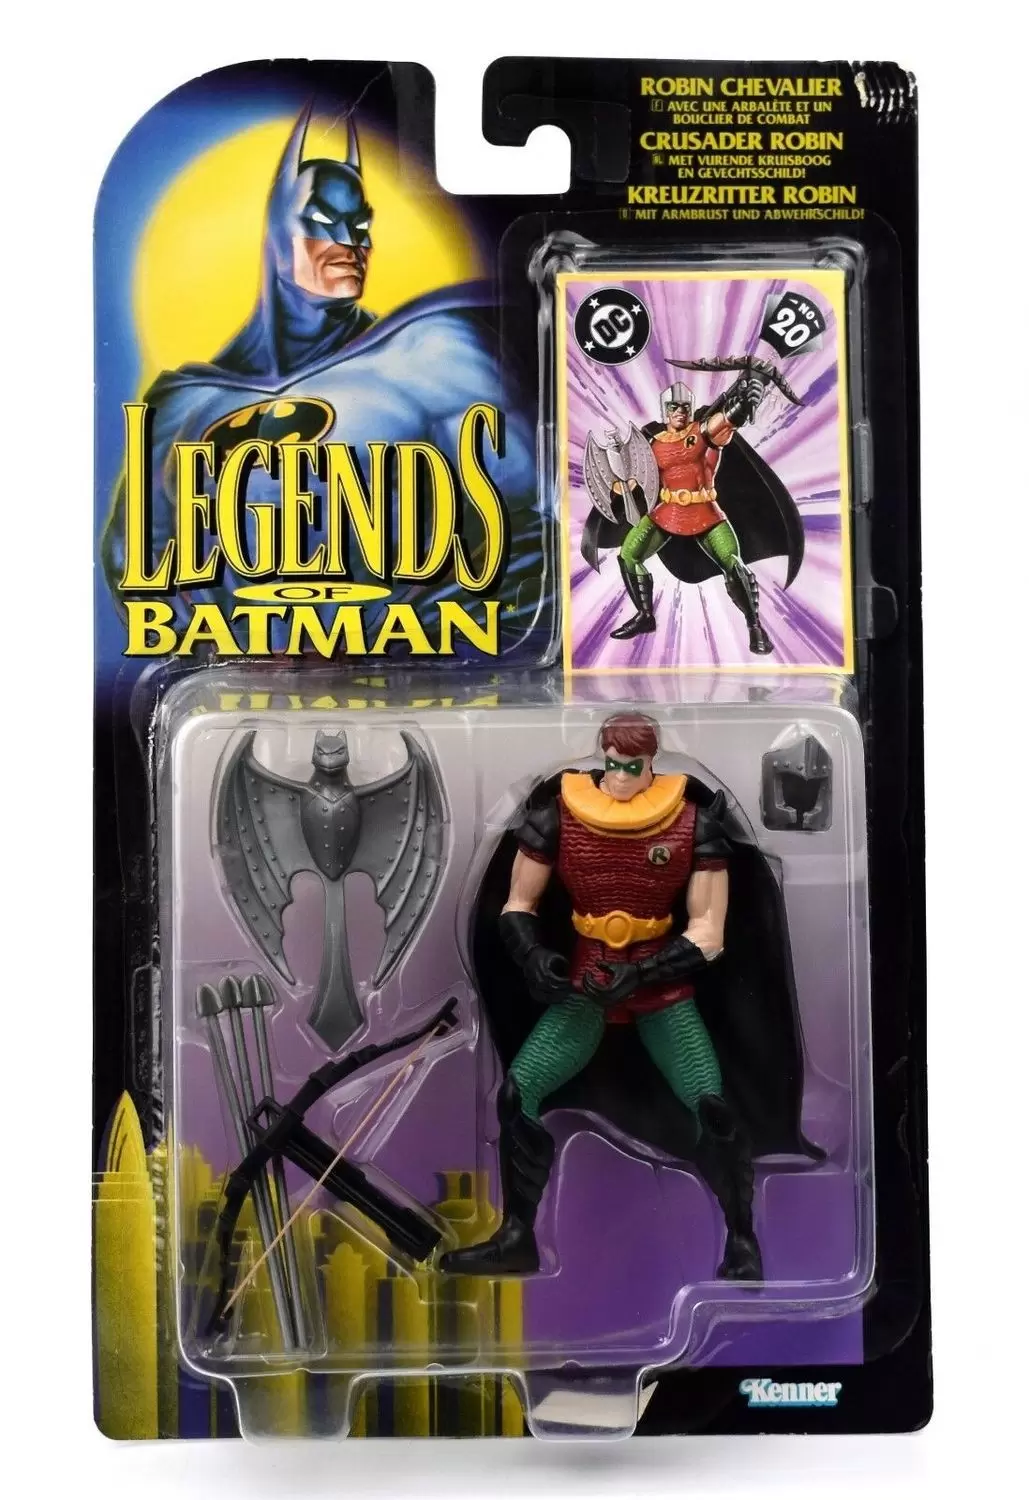 Legends of Batman - Crusader Robin